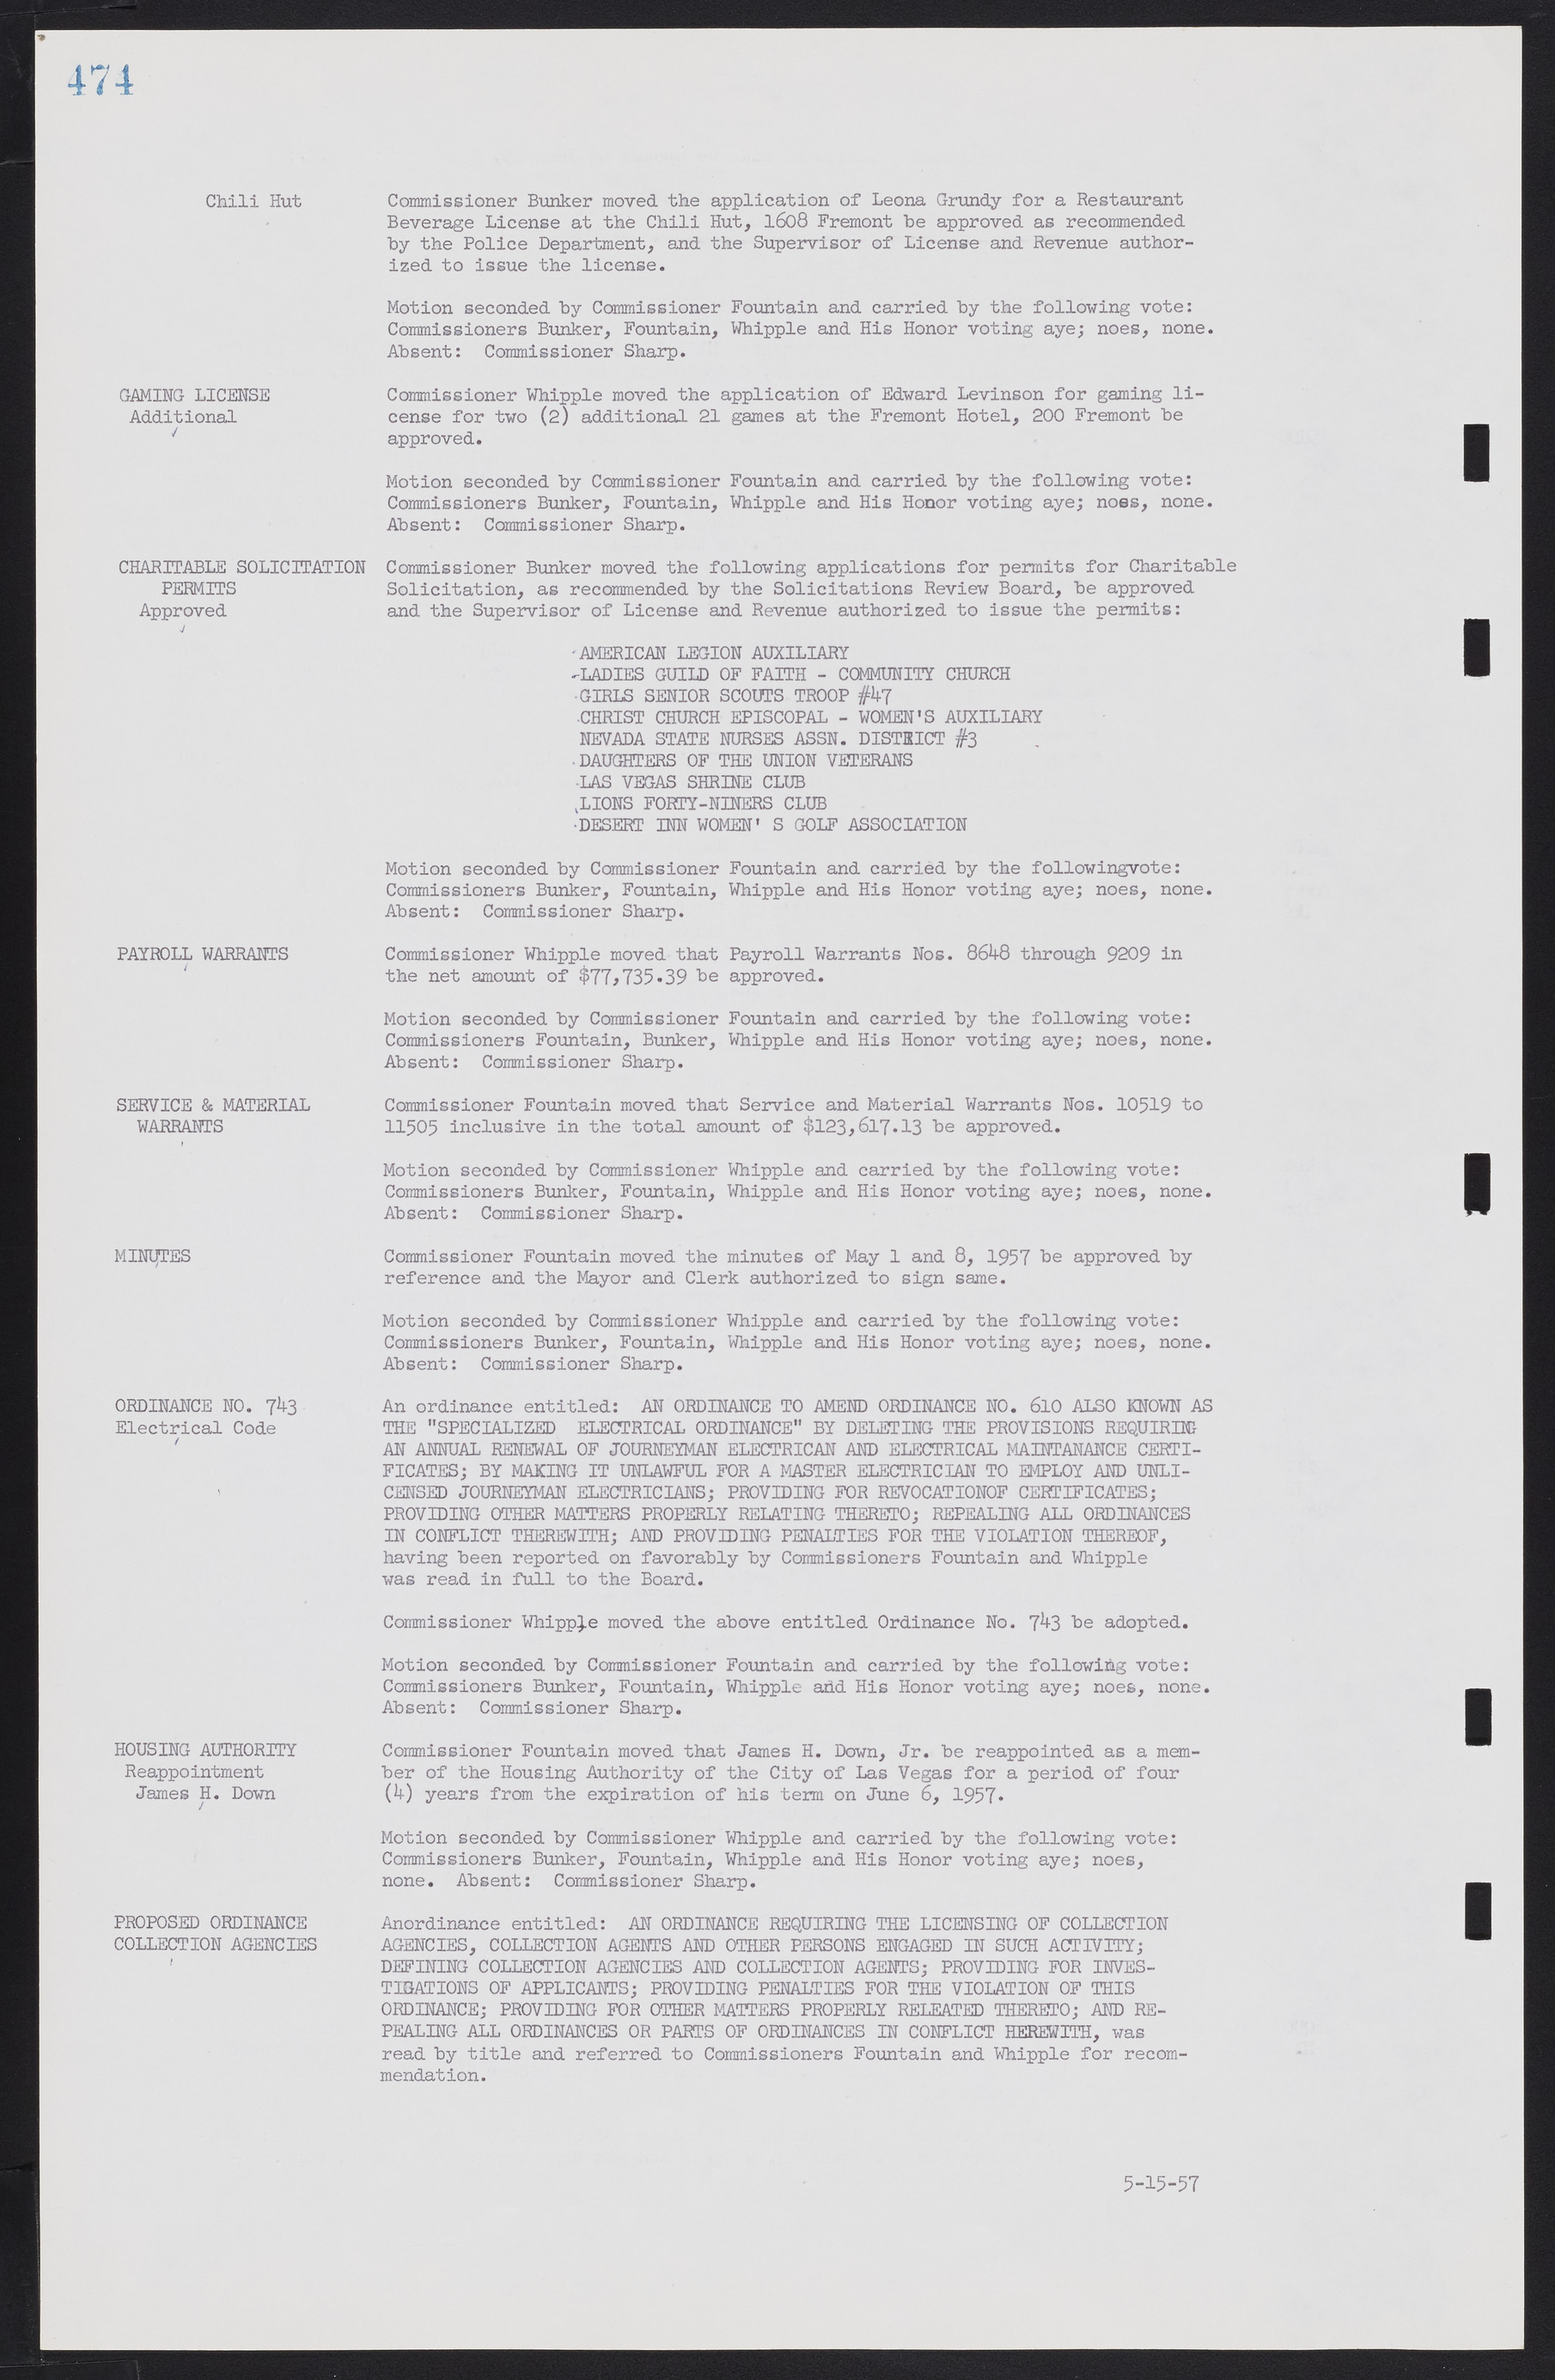 Las Vegas City Commission Minutes, September 21, 1955 to November 20, 1957, lvc000010-494